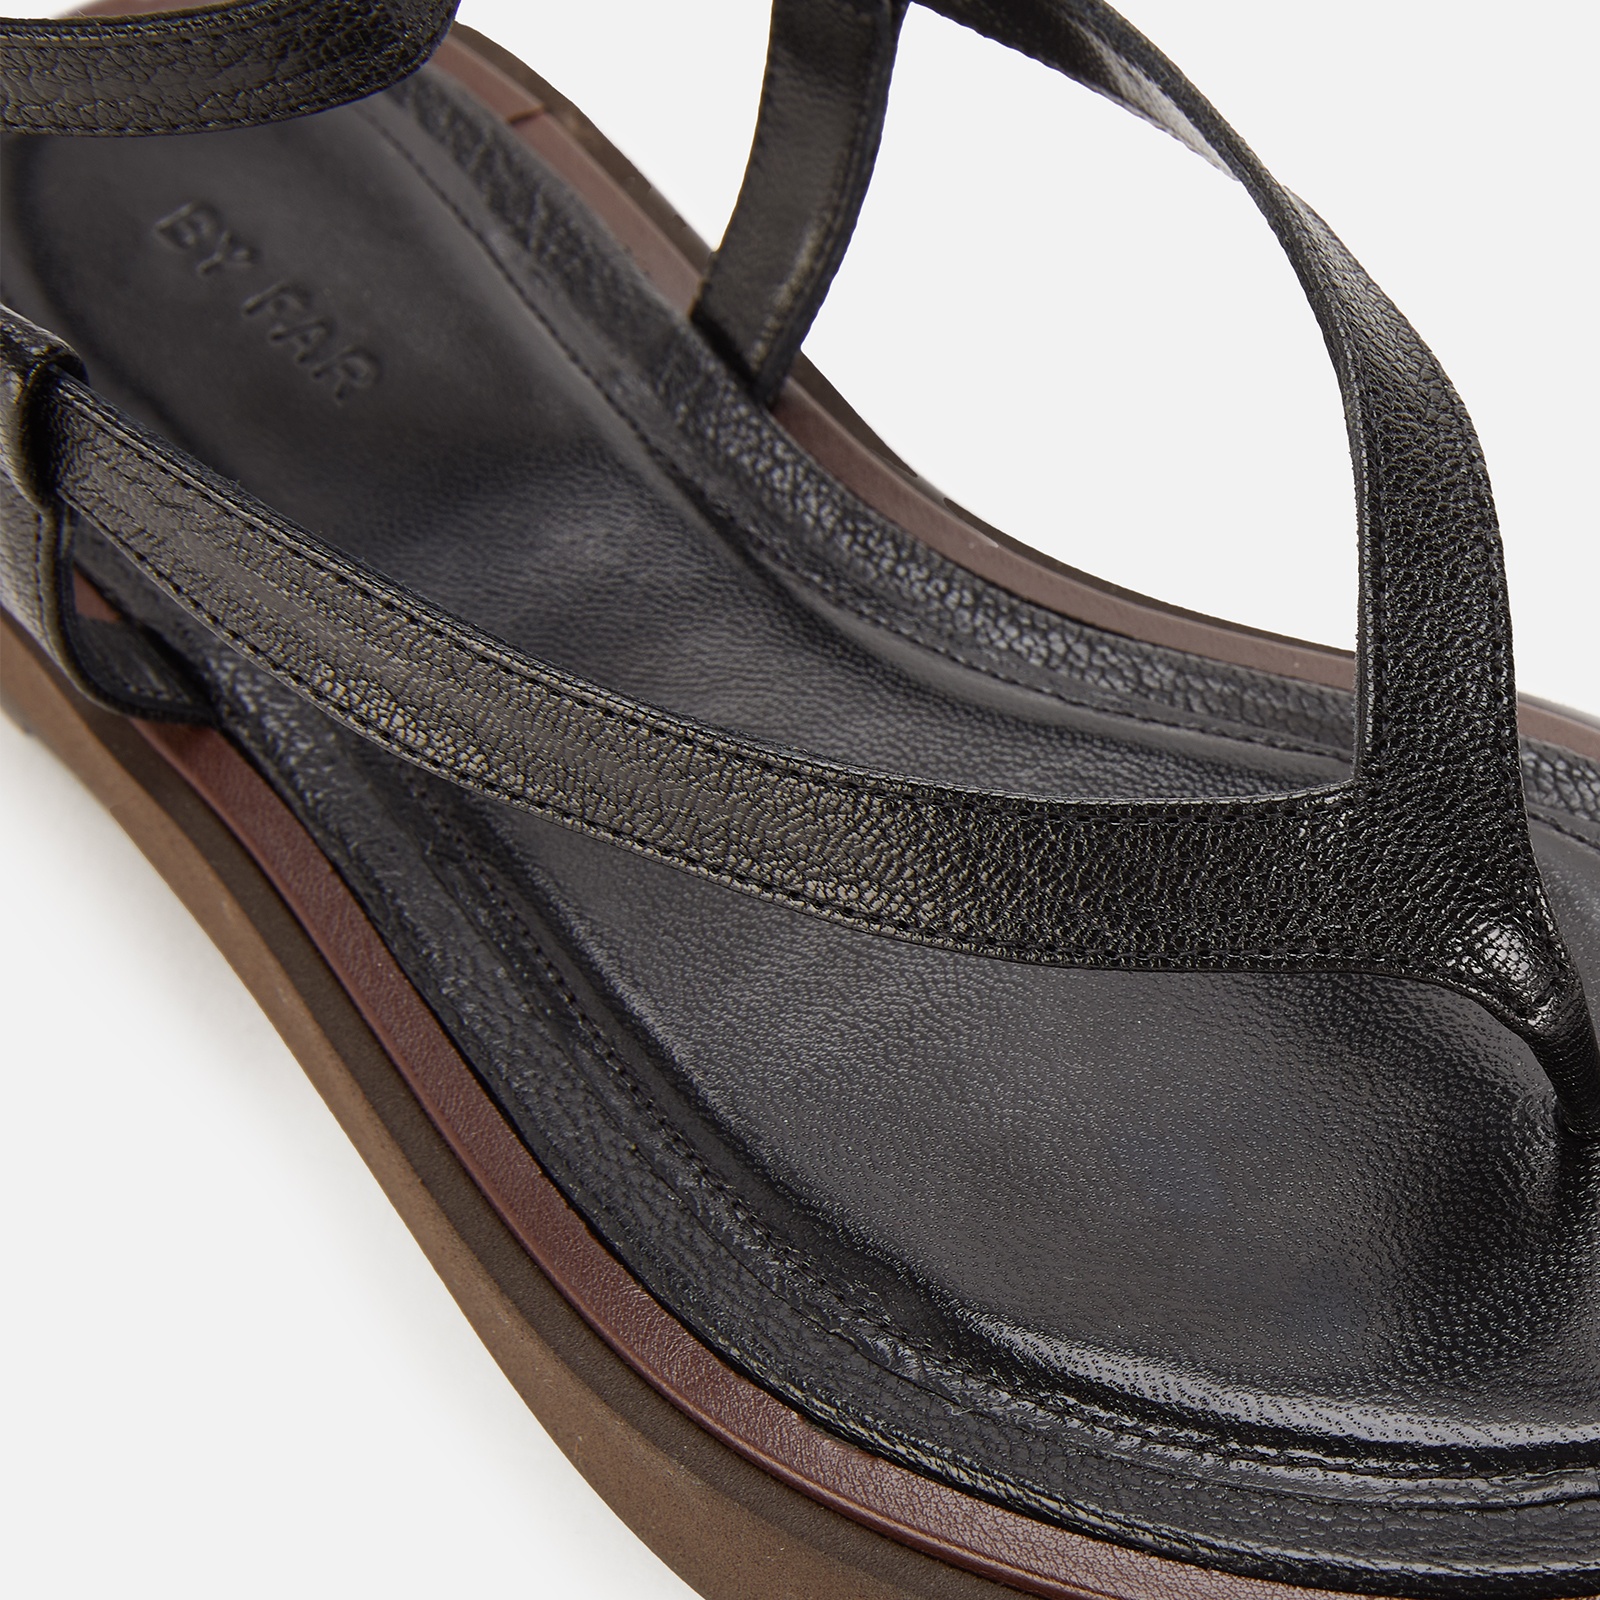 BY FAR Women's Cece Leather Toe Post Sandals - Black - 4